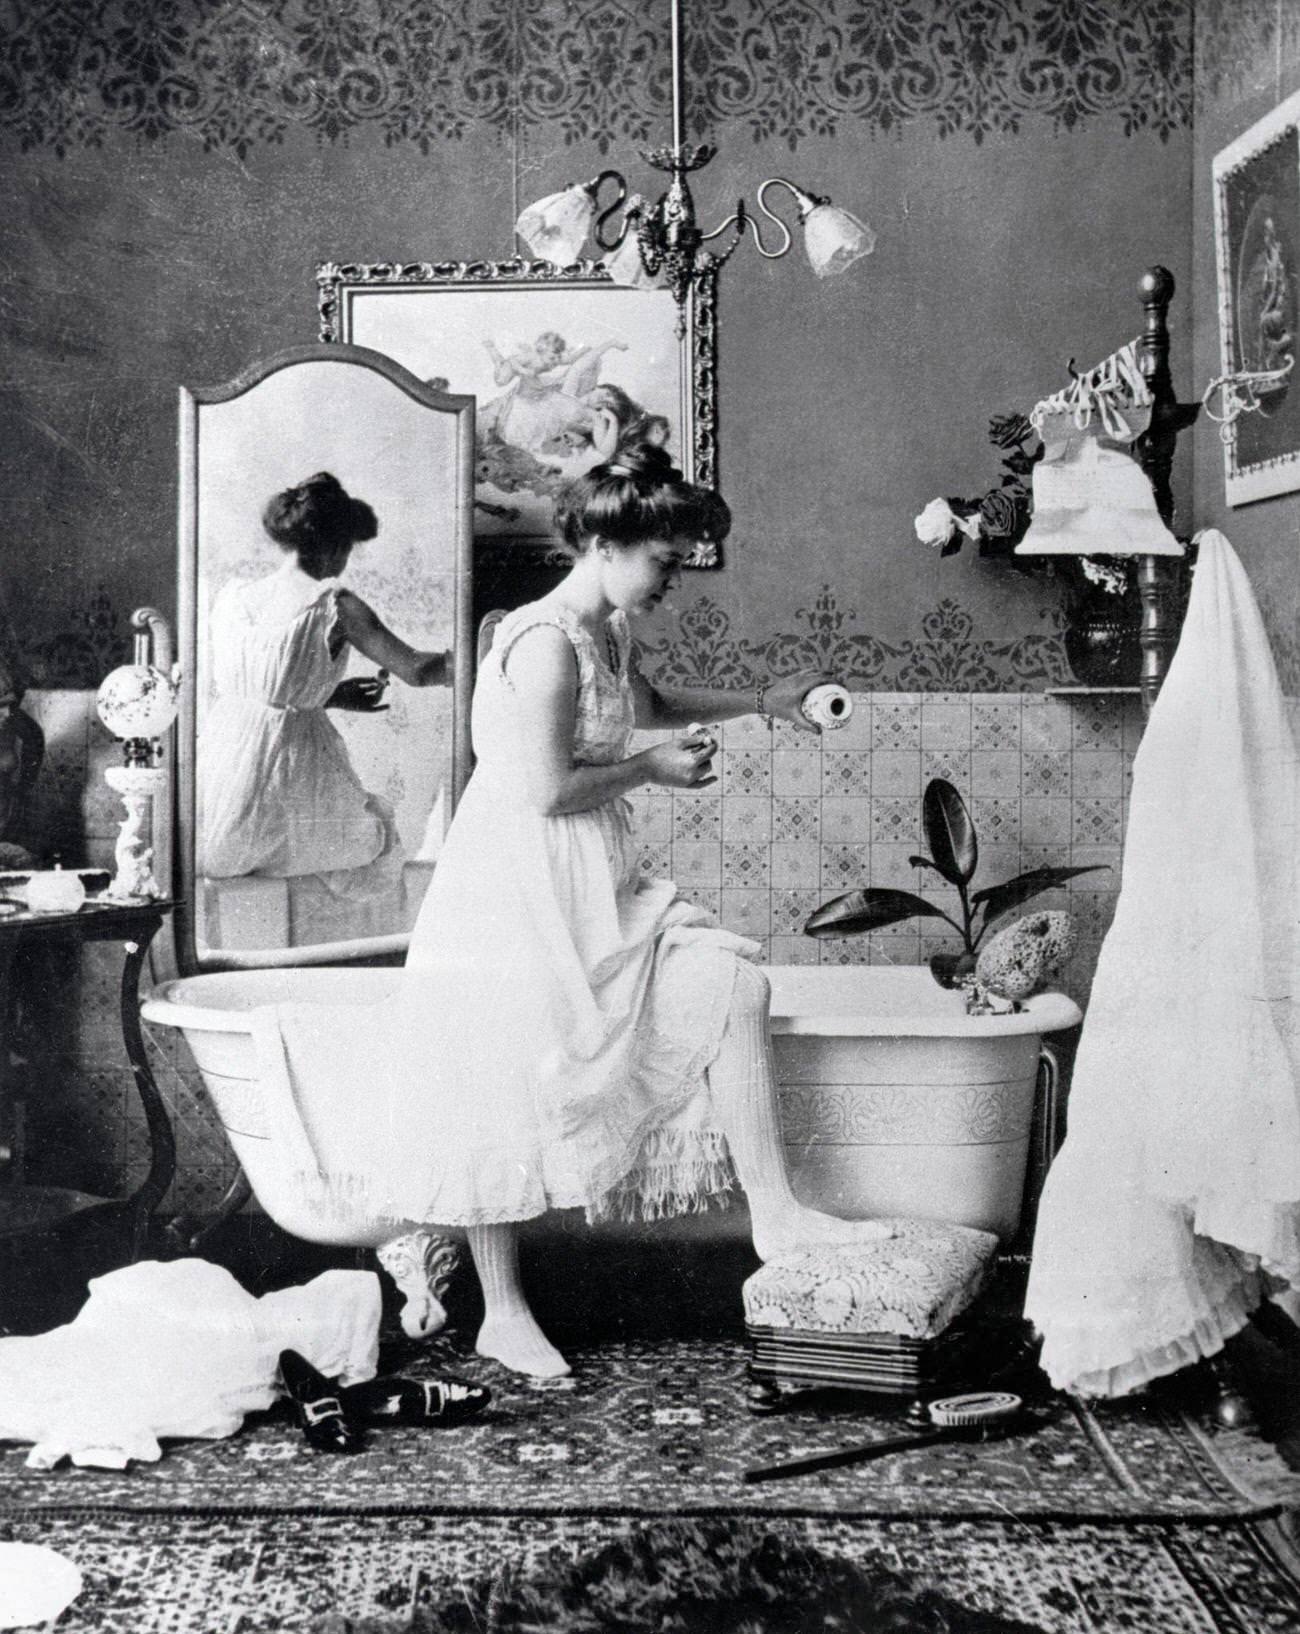 Victorian lady preparing for a bath, late 19th century.